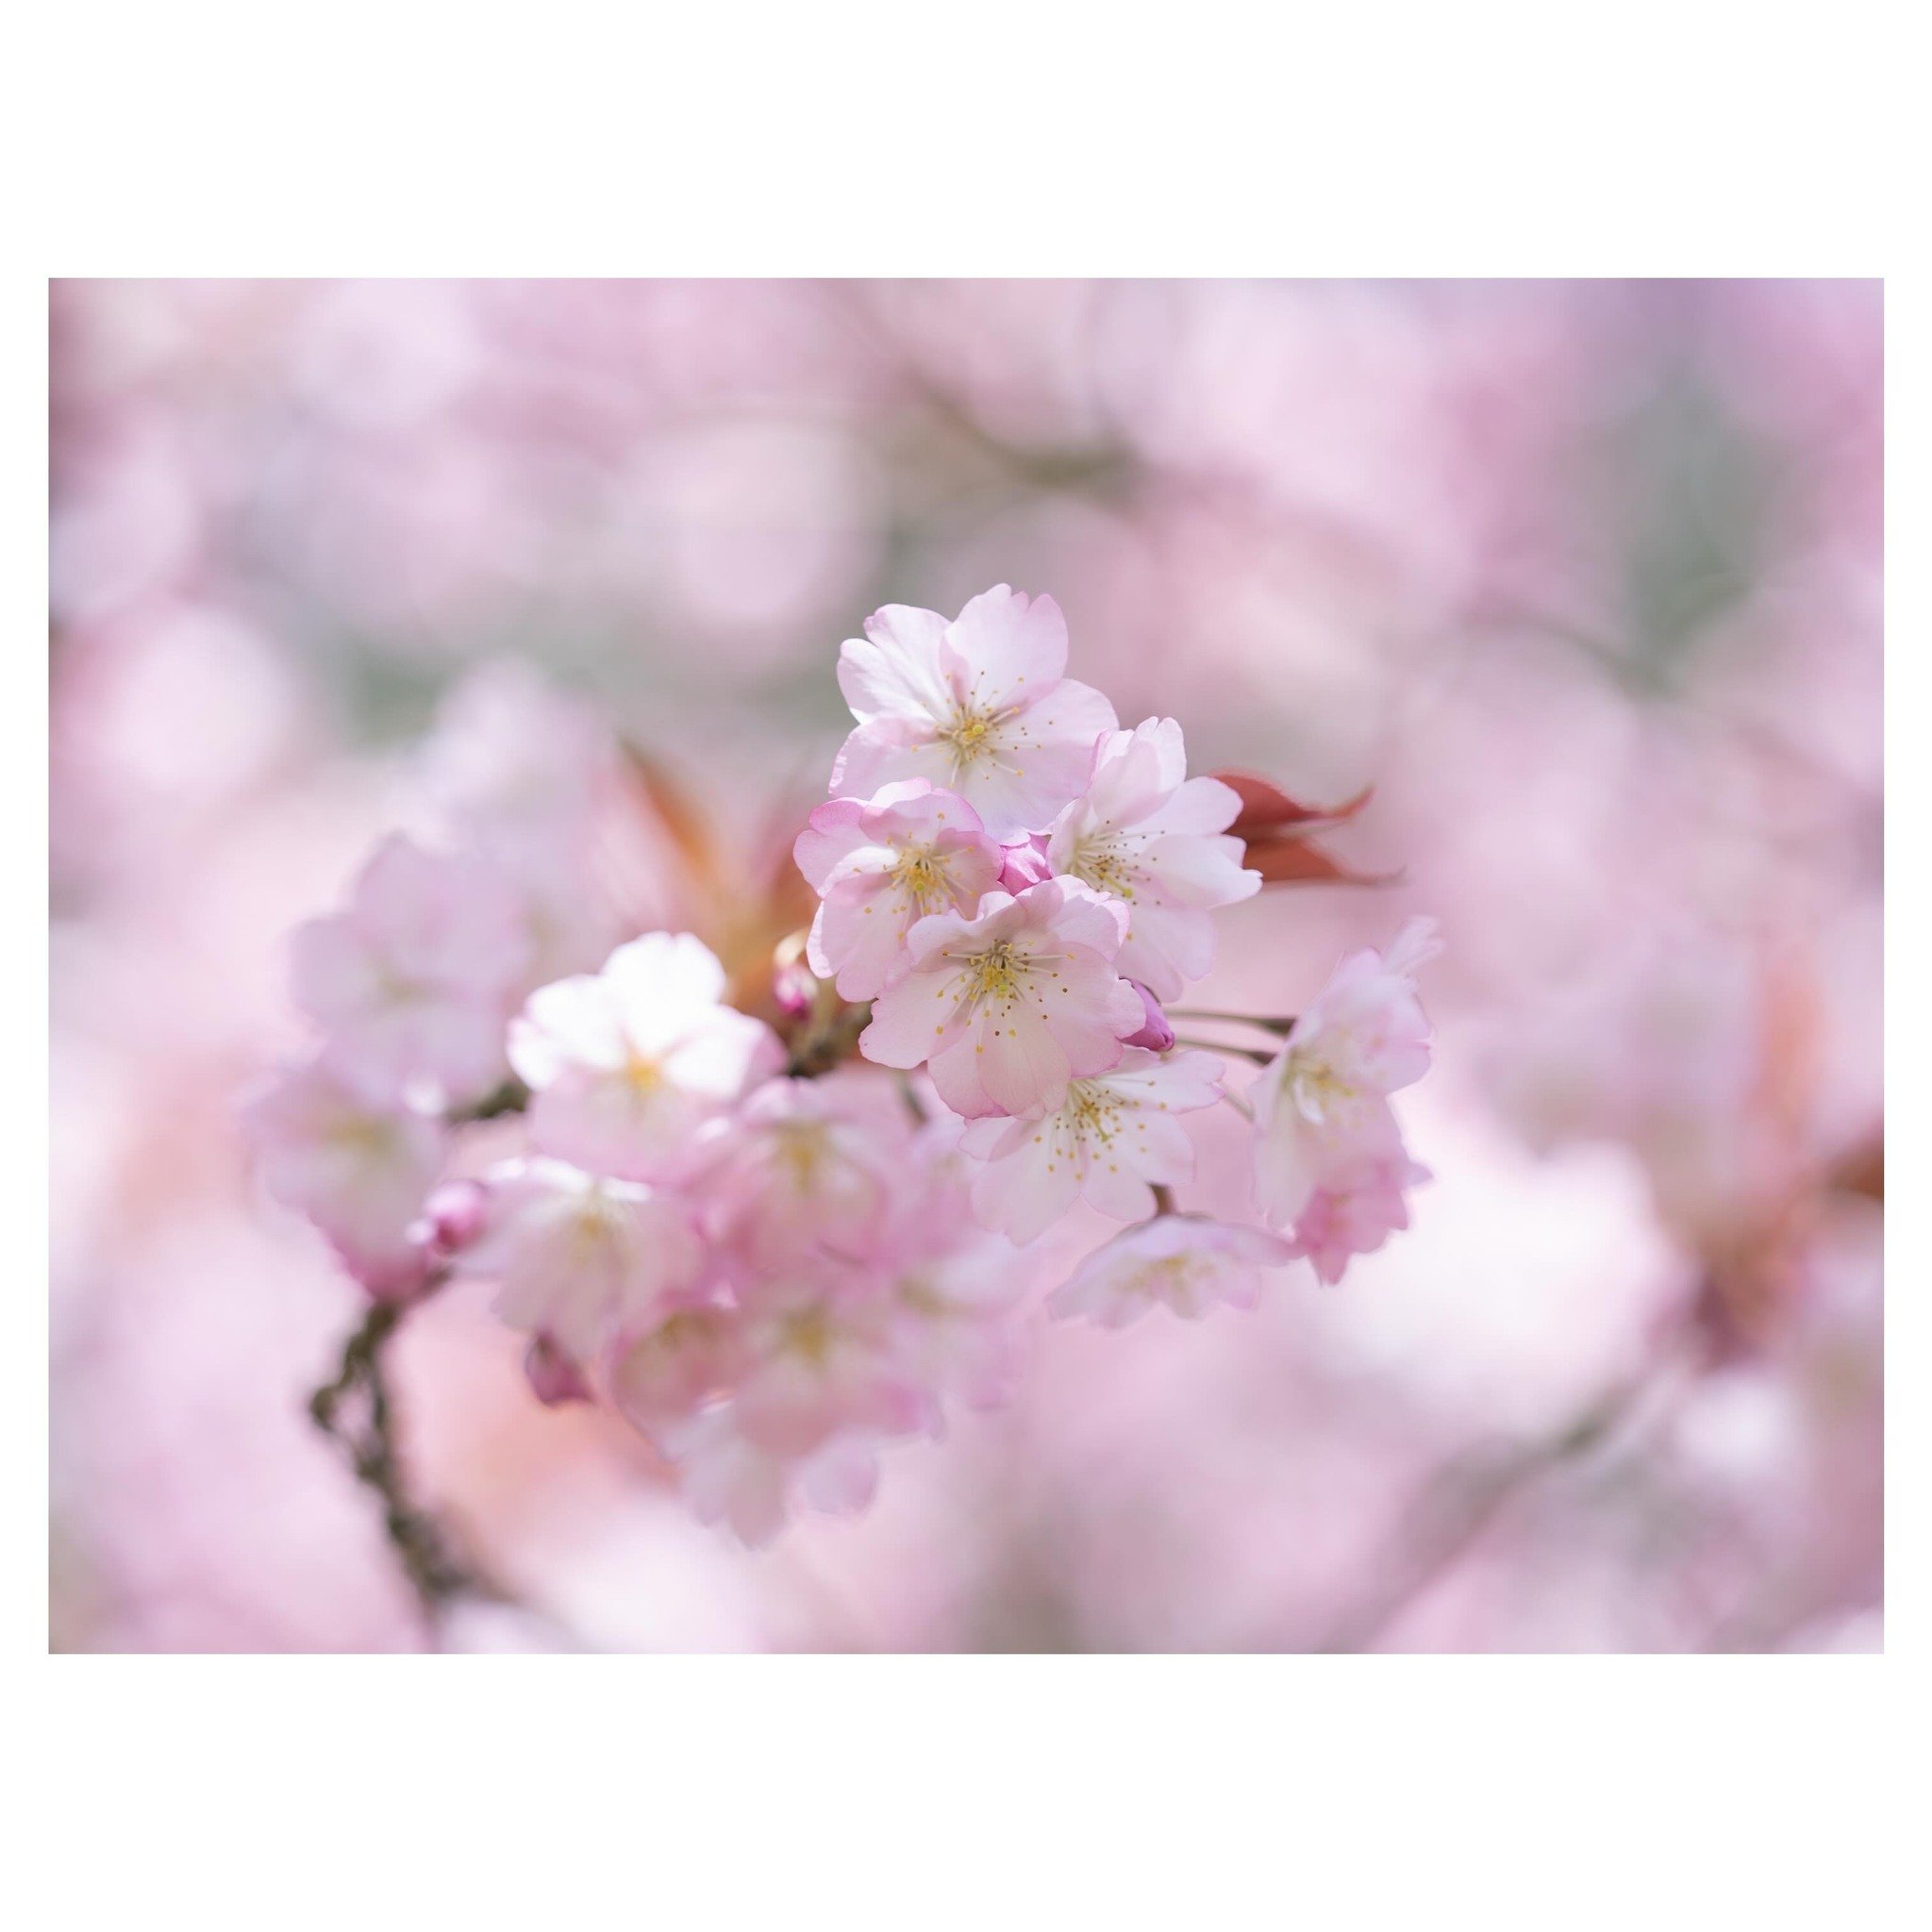 Spring III
.
.
.
.
.
#tree #spring #impressionism #zennature #blossom #elementsphotomag #landscapephotography #trees #woodlandphotography #landscapephotography #minimalmood #minimalism #abstractart #naturephotography #fineartphotography #artclassifie